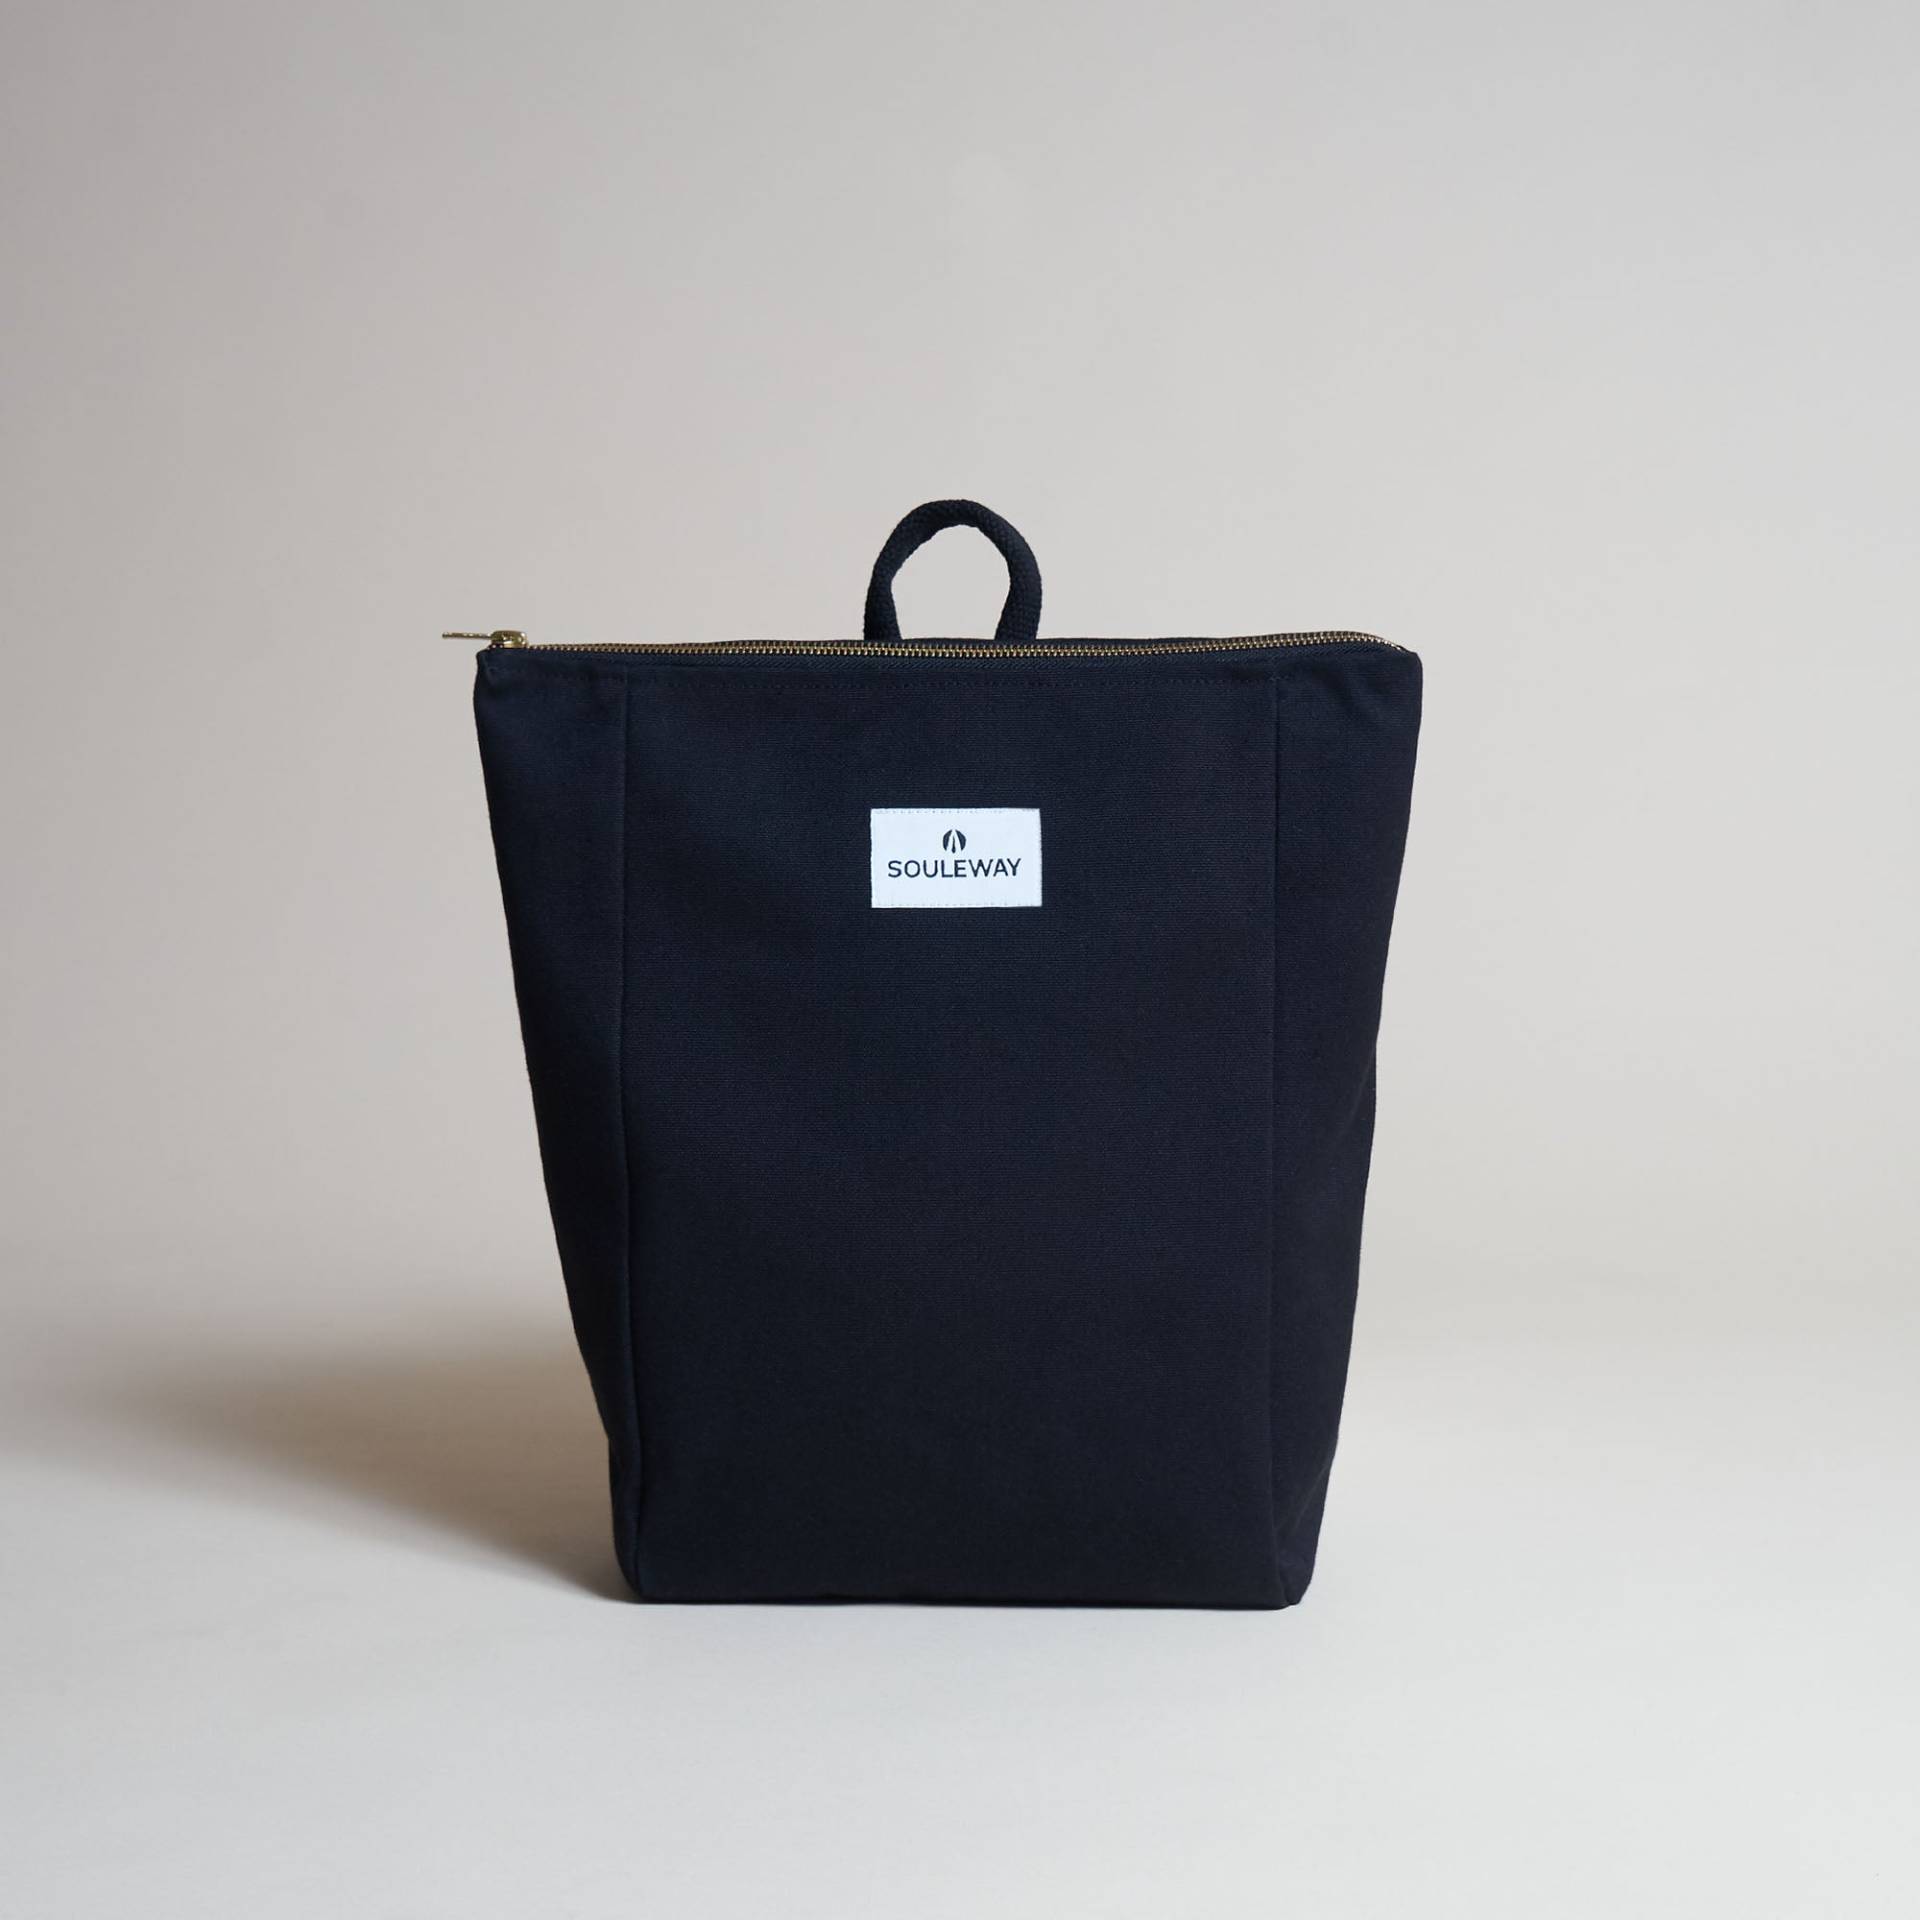 SOULEWAY - Simple Backpack S, Rucksack, 9 Liter Volumen, Laptopfach 13 Zoll, Made in Germany, Handgepäck, vegan, wasserabweisend, Night Black von Souleway